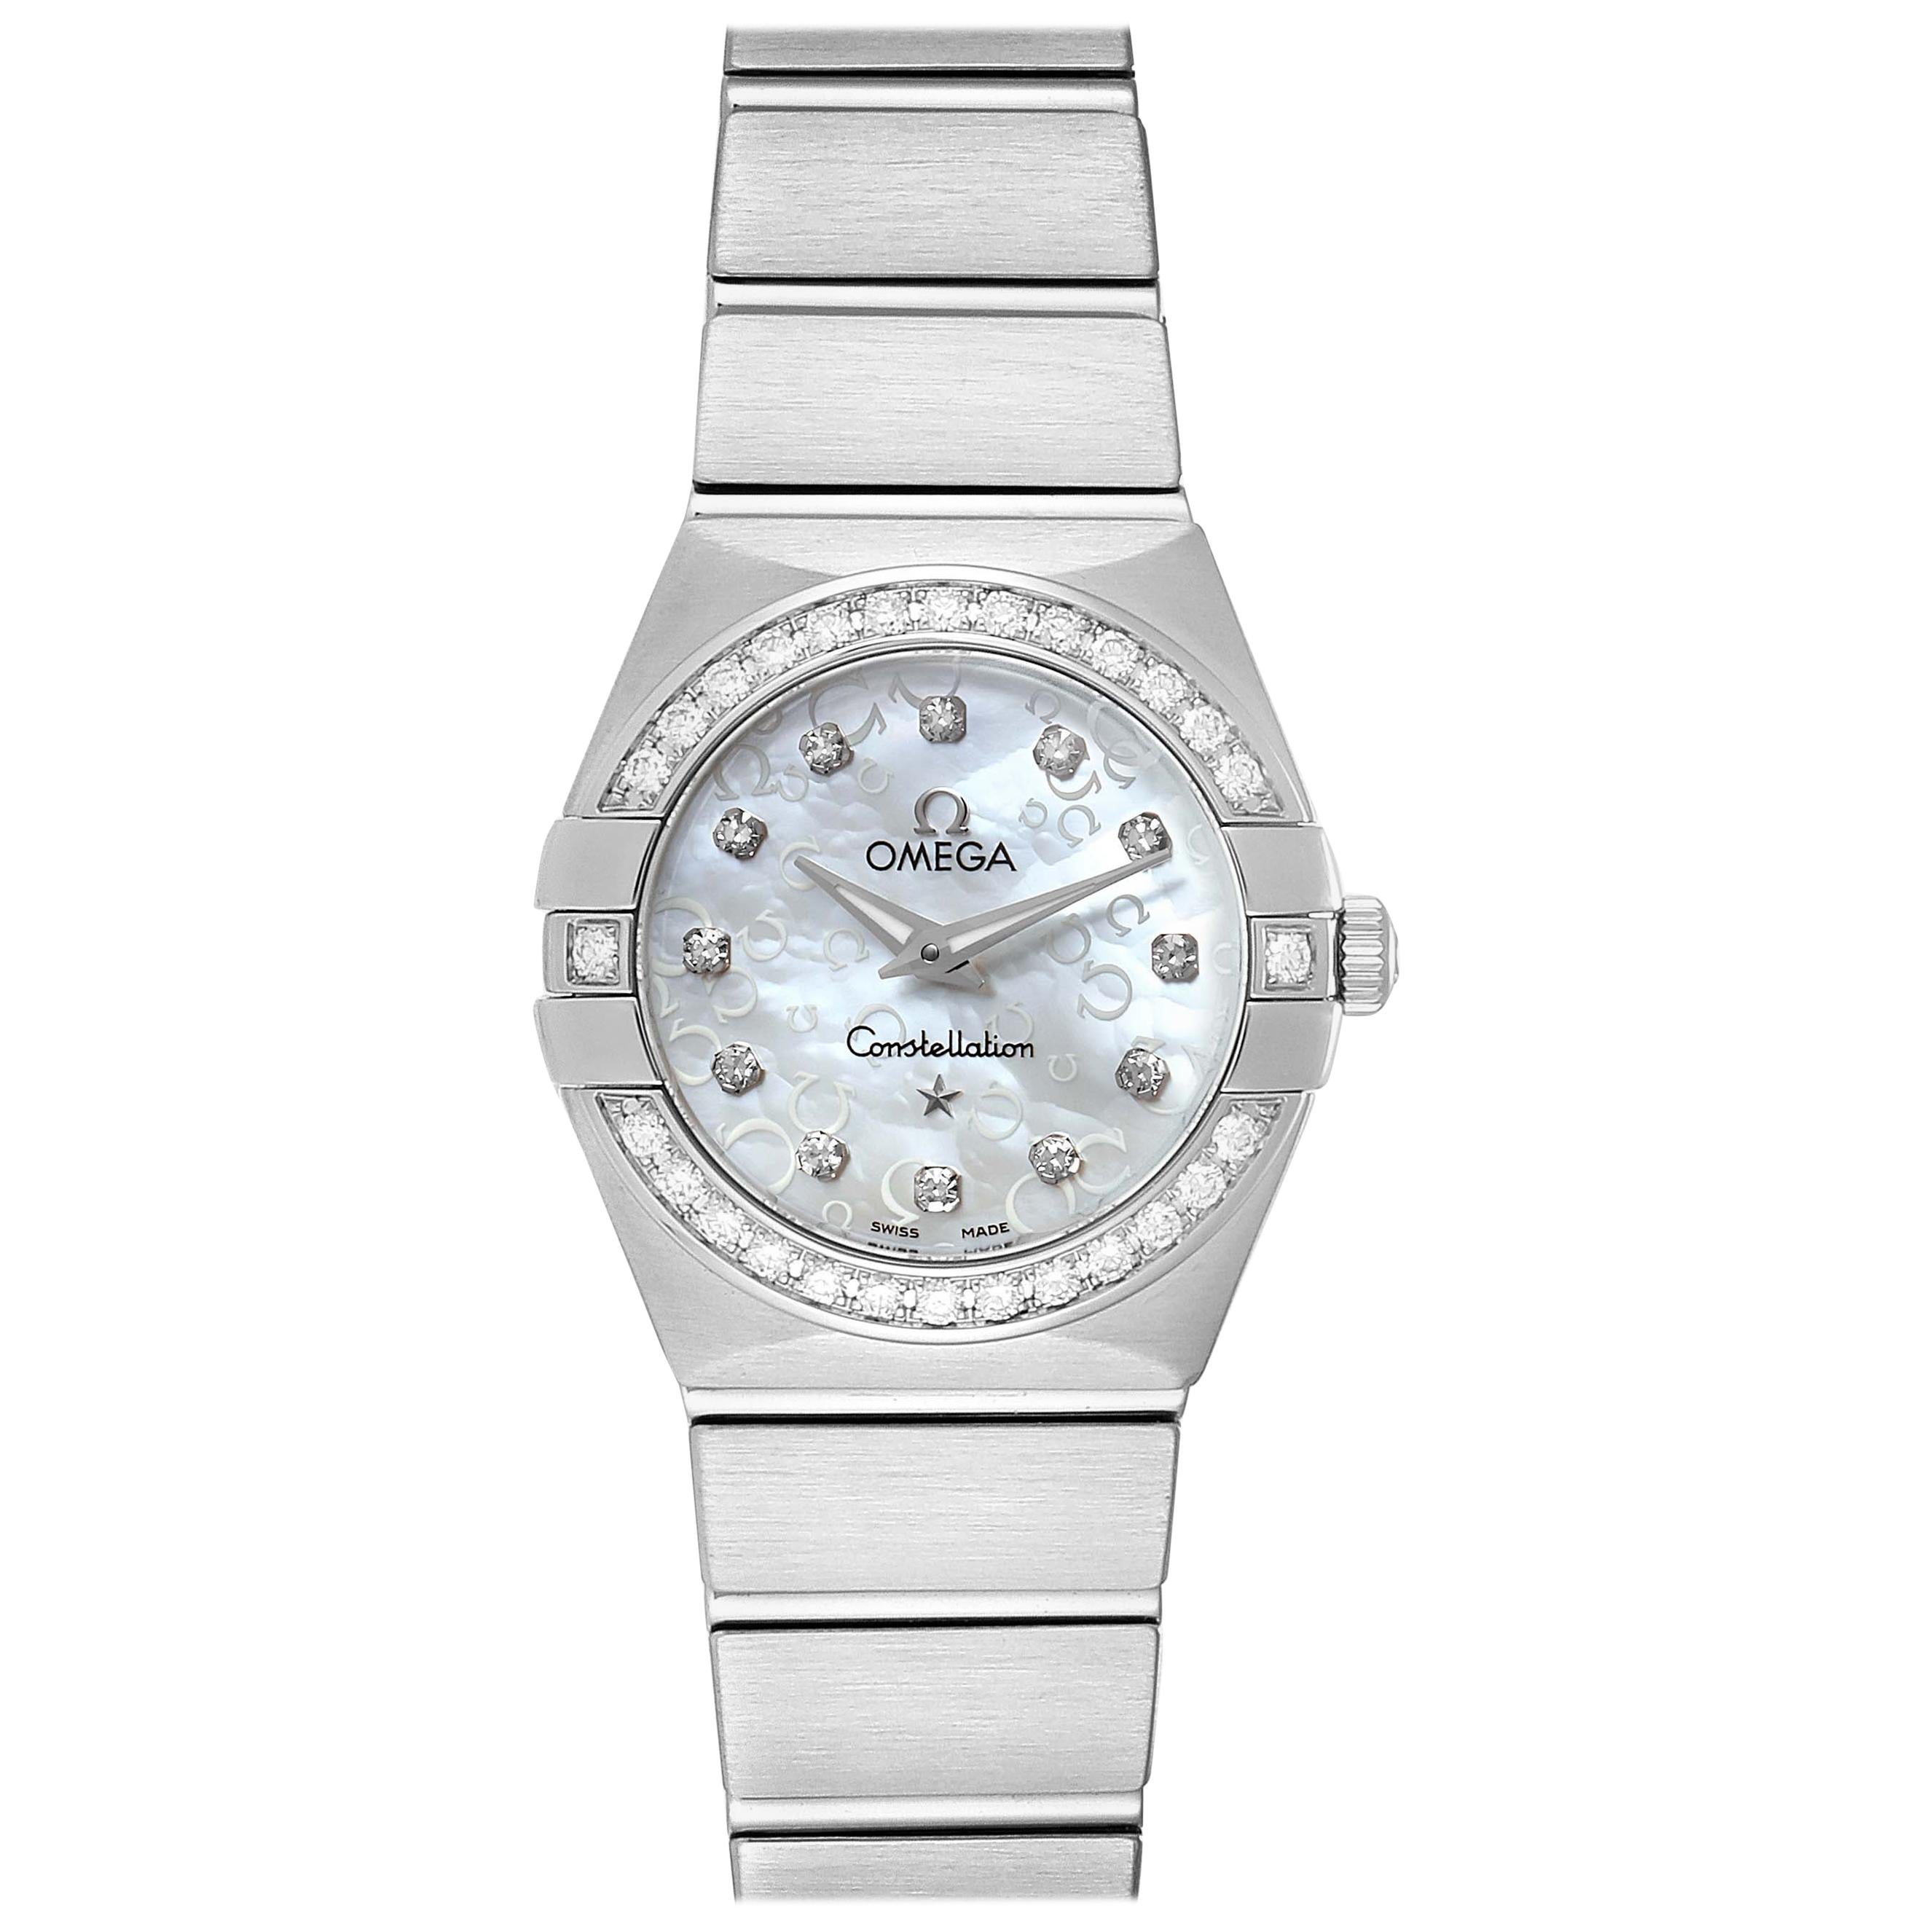 Omega Constellation Diamond Ladies Watch 123.15.24.60.52.001 For Sale